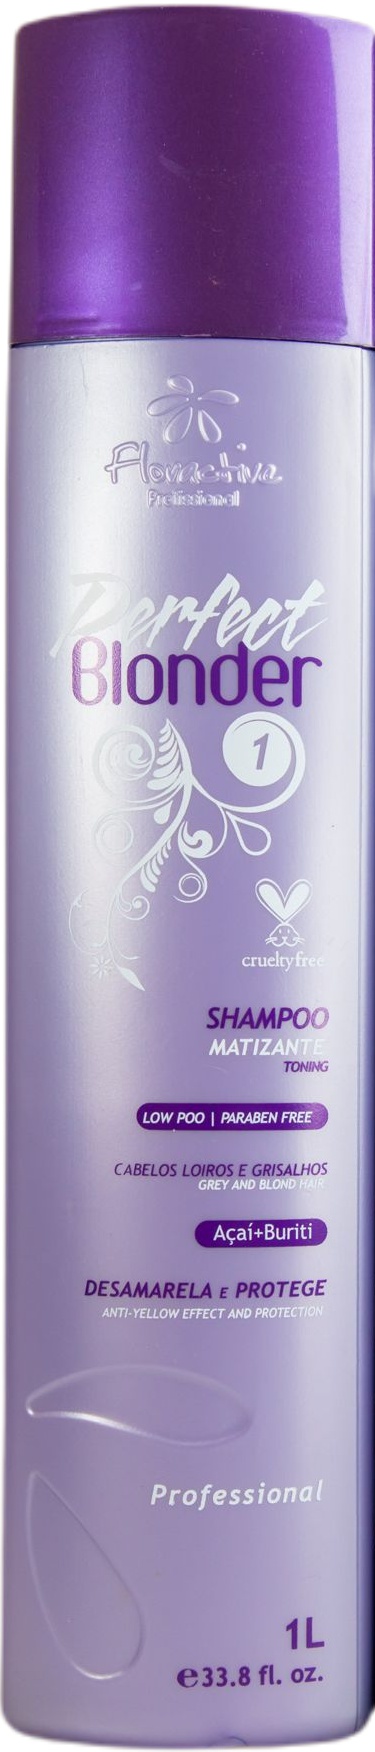 Floractive Perfect Blonder - Shampoo